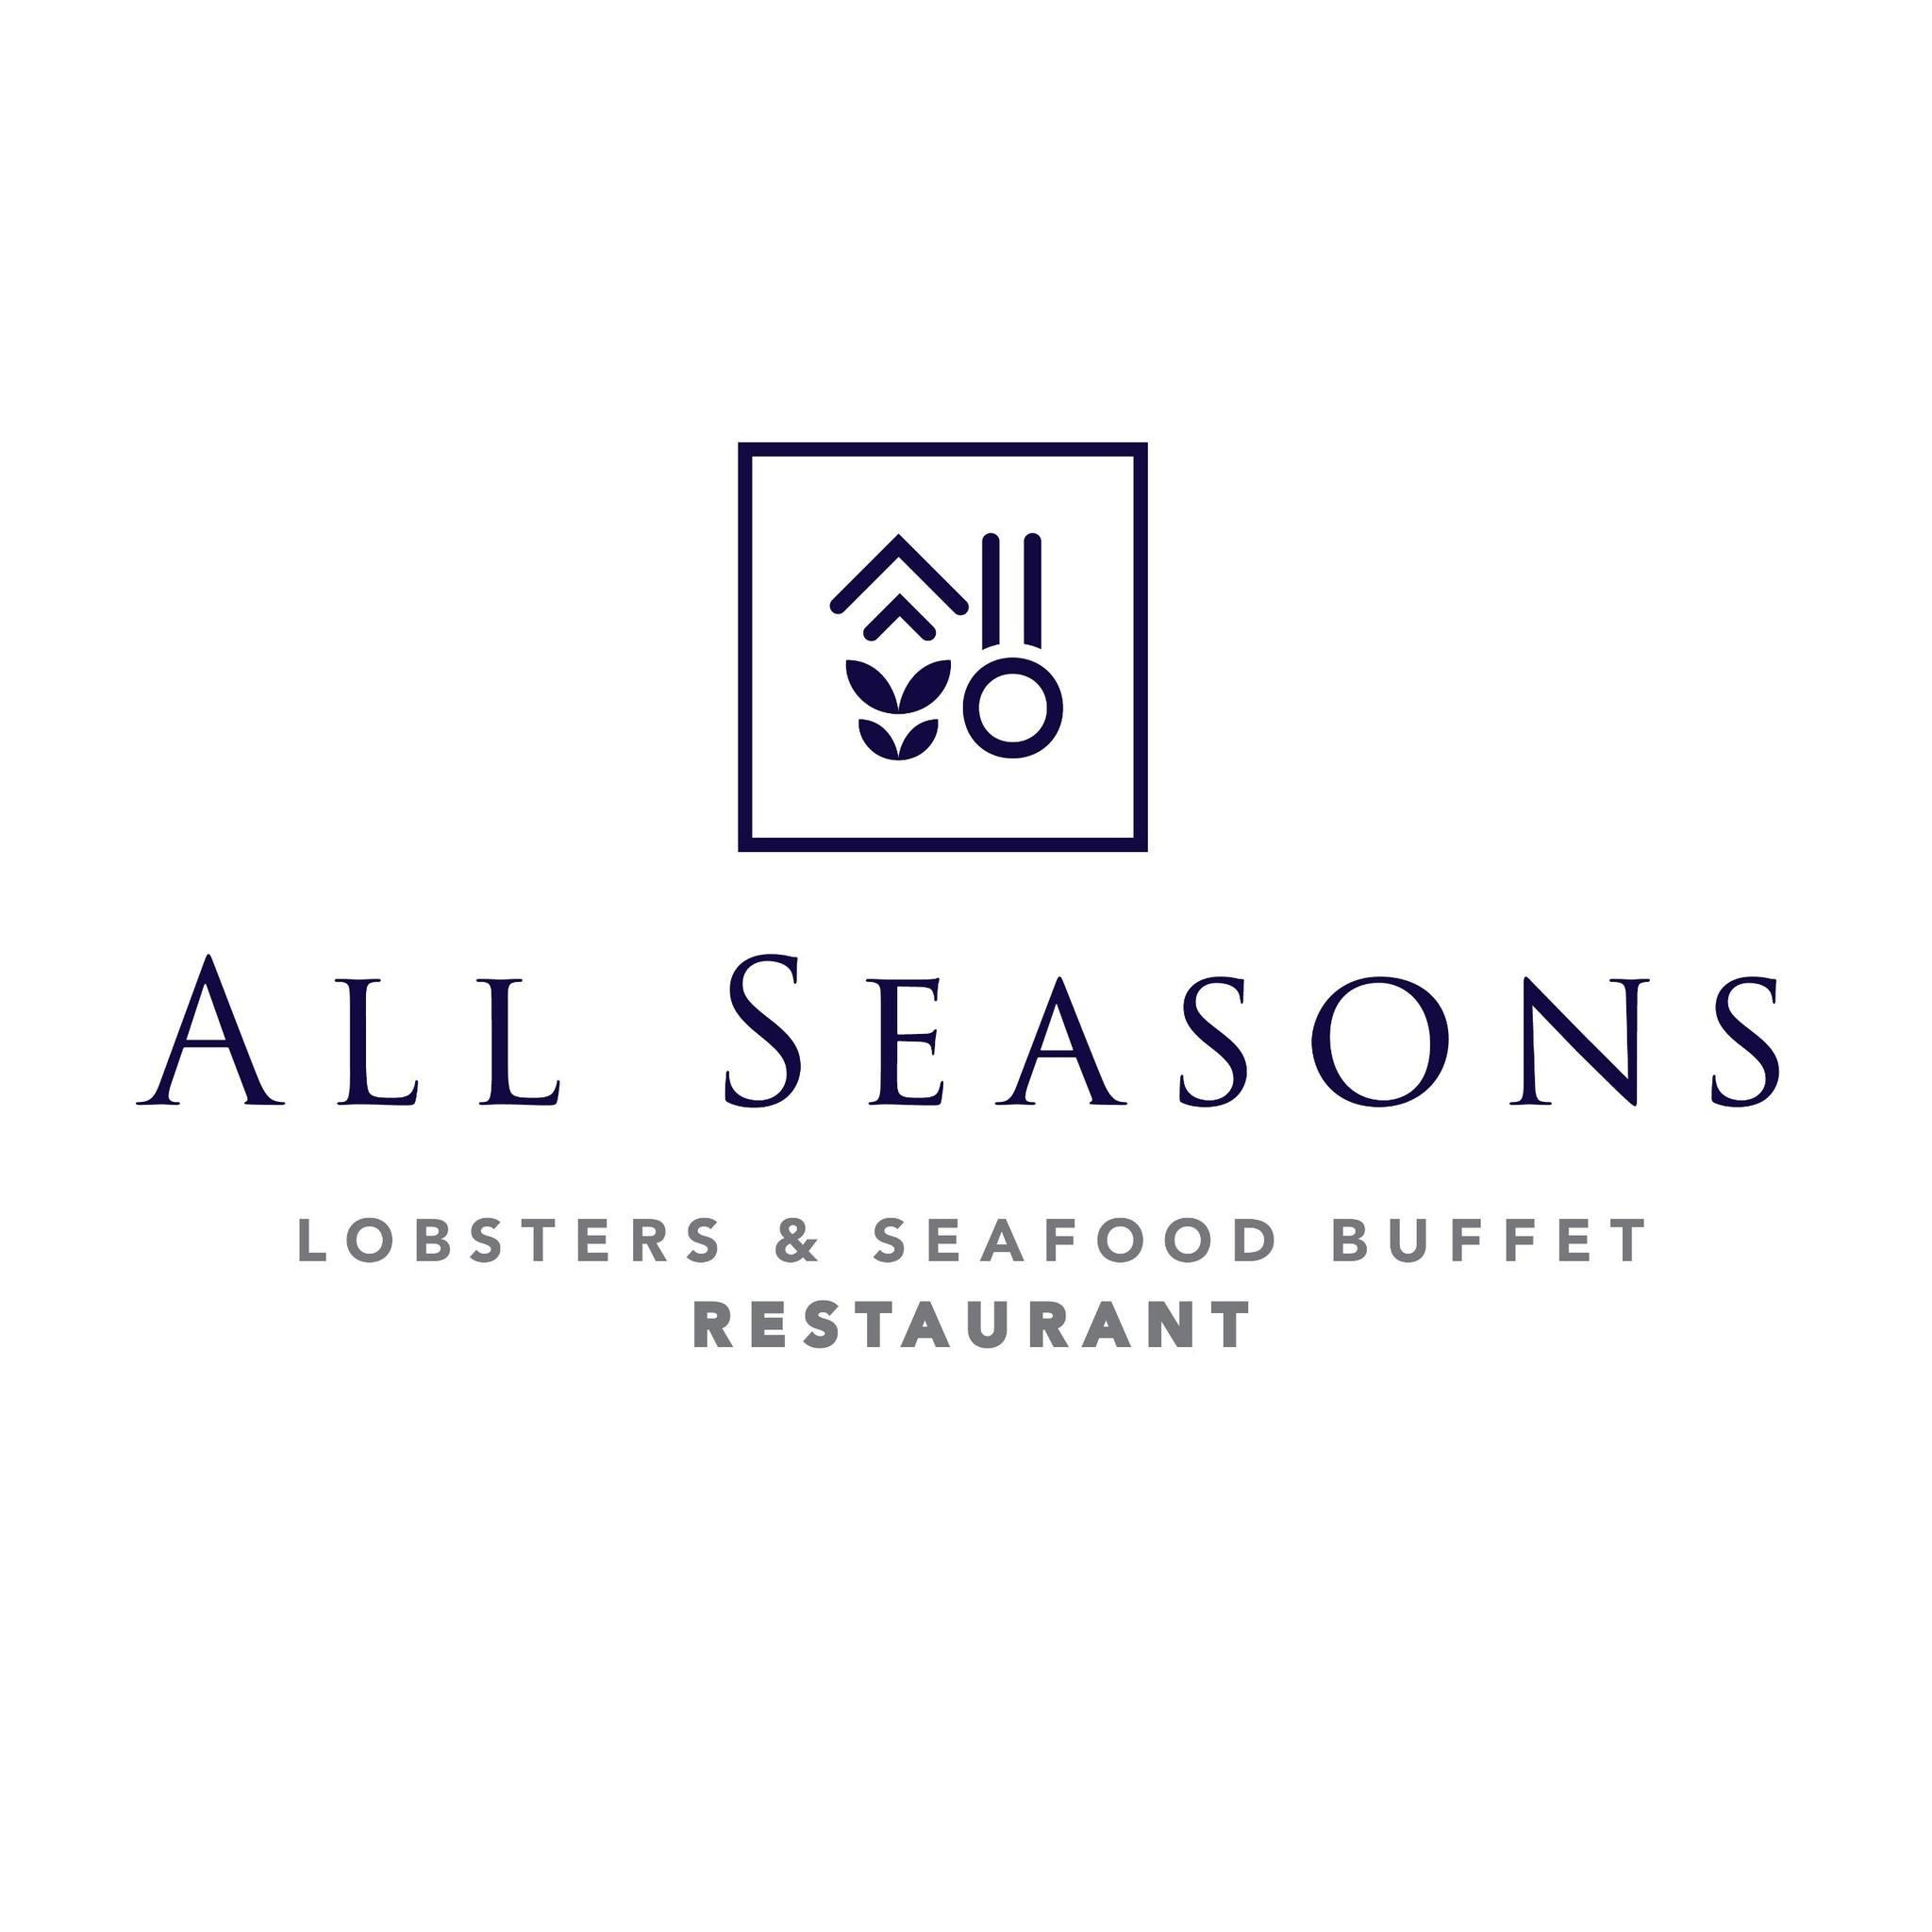 All Seasons – Lobster & Seafood Buffet Restaurant